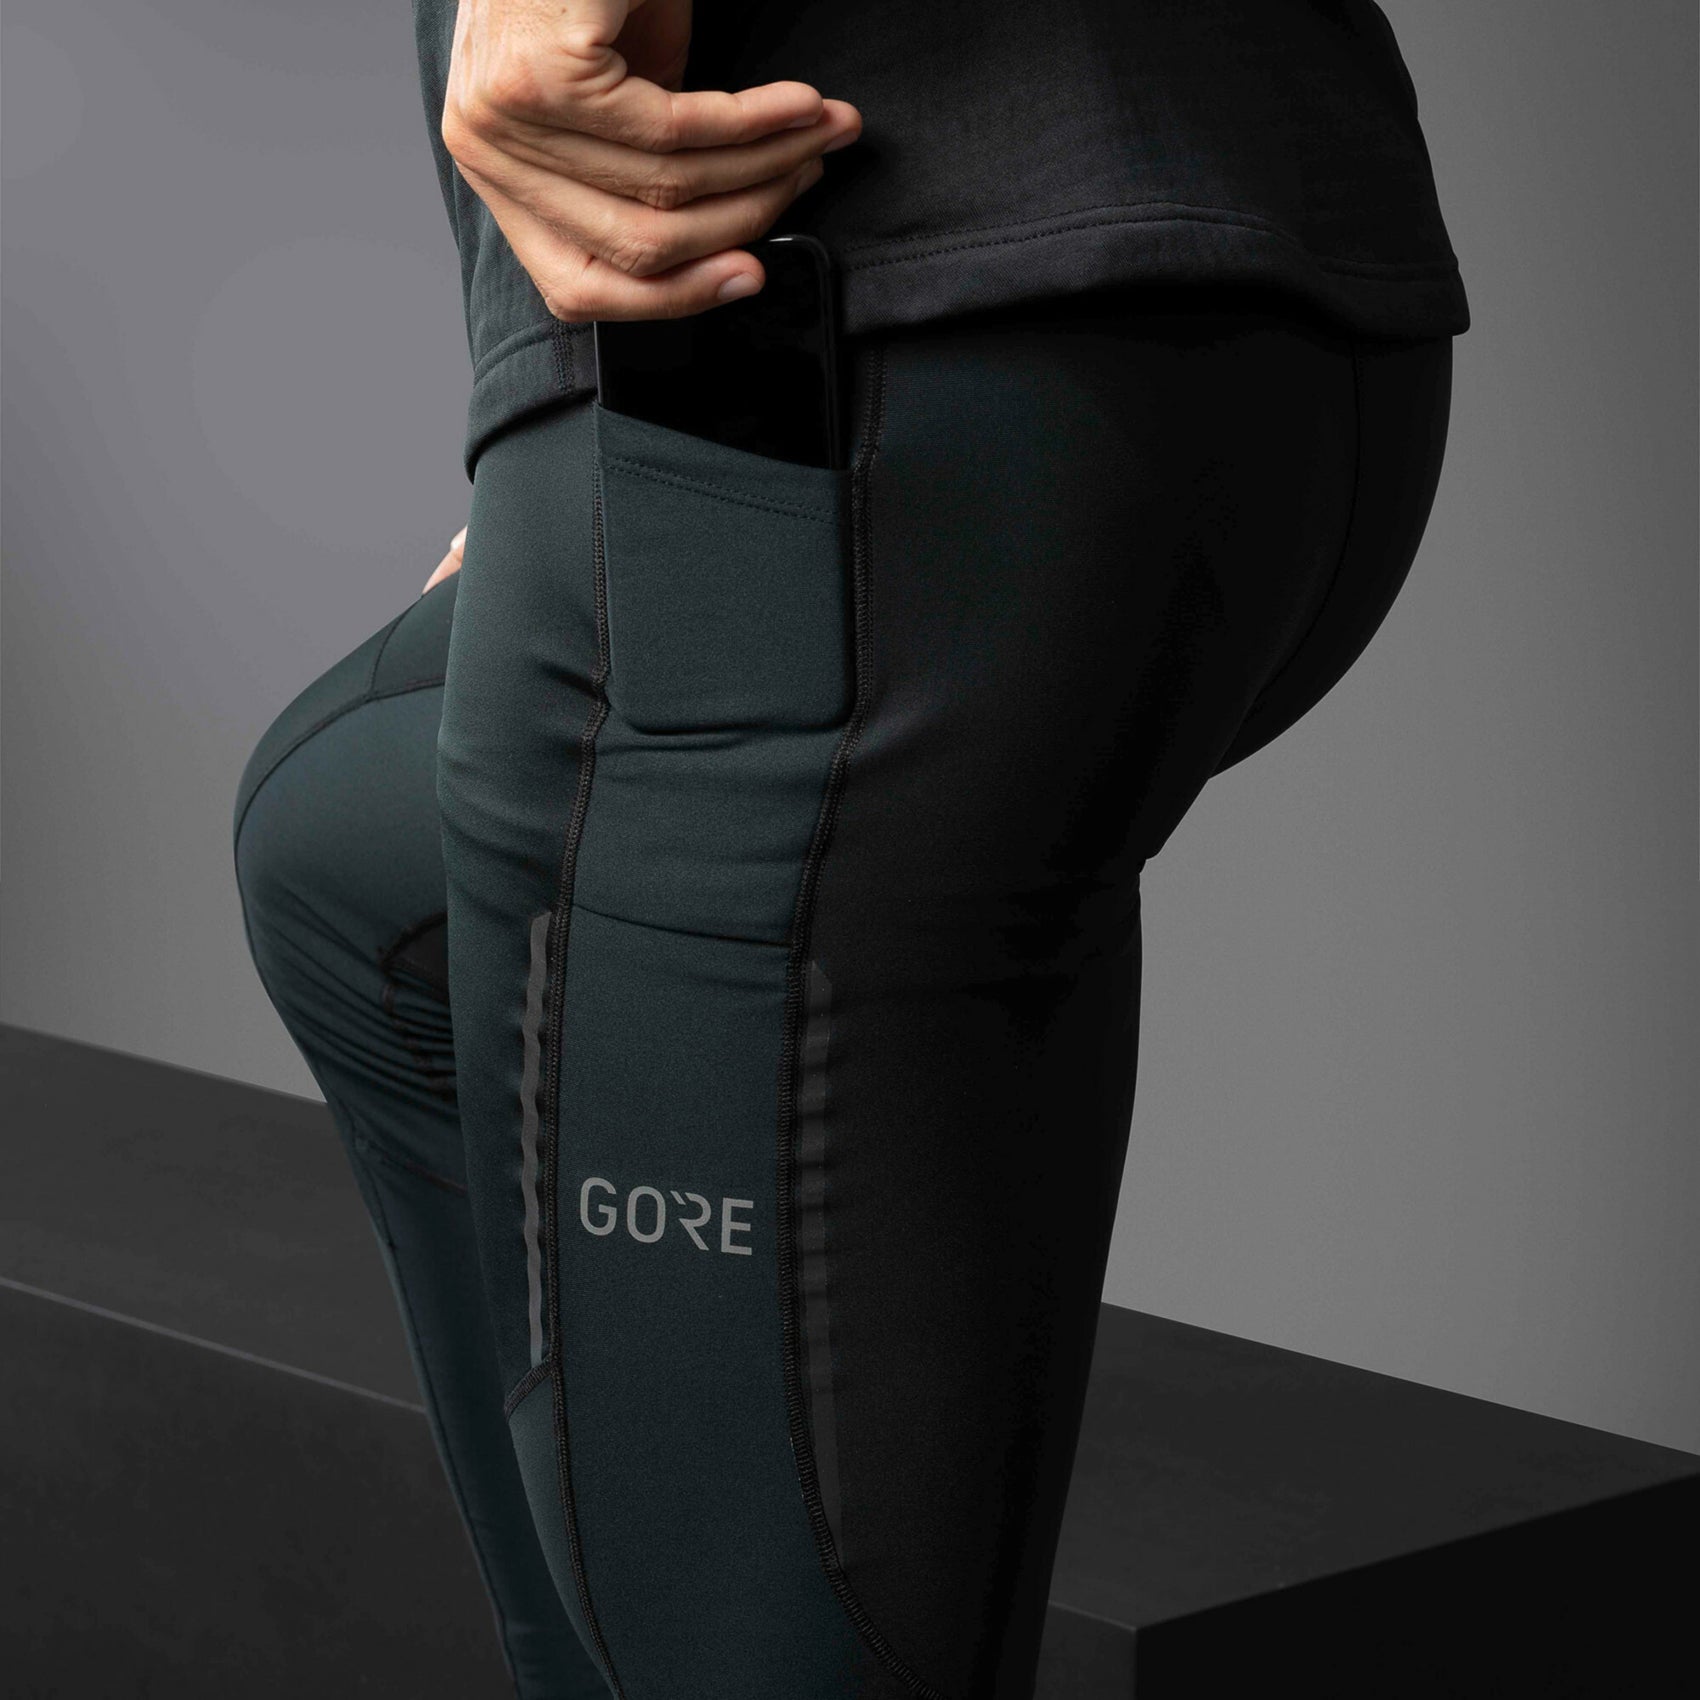 Gore Wear R5 GORE-TEX INFINIUM Tights